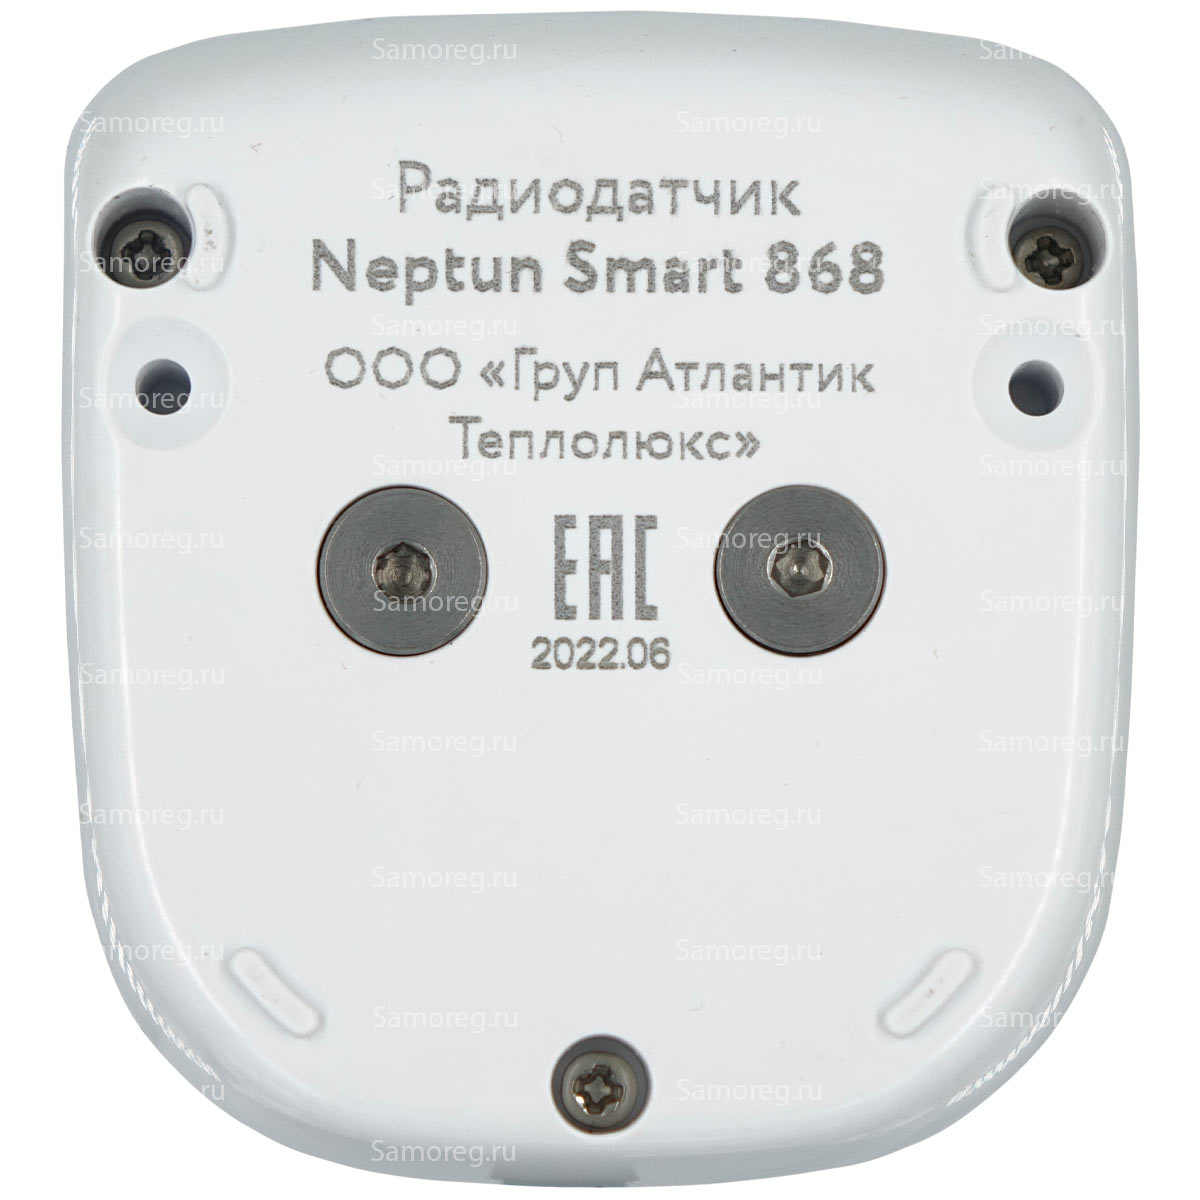 Радиодатчик контроля протечки воды Neptun Smart 868 (до 50 м, 869,00 Мгц, IP67)